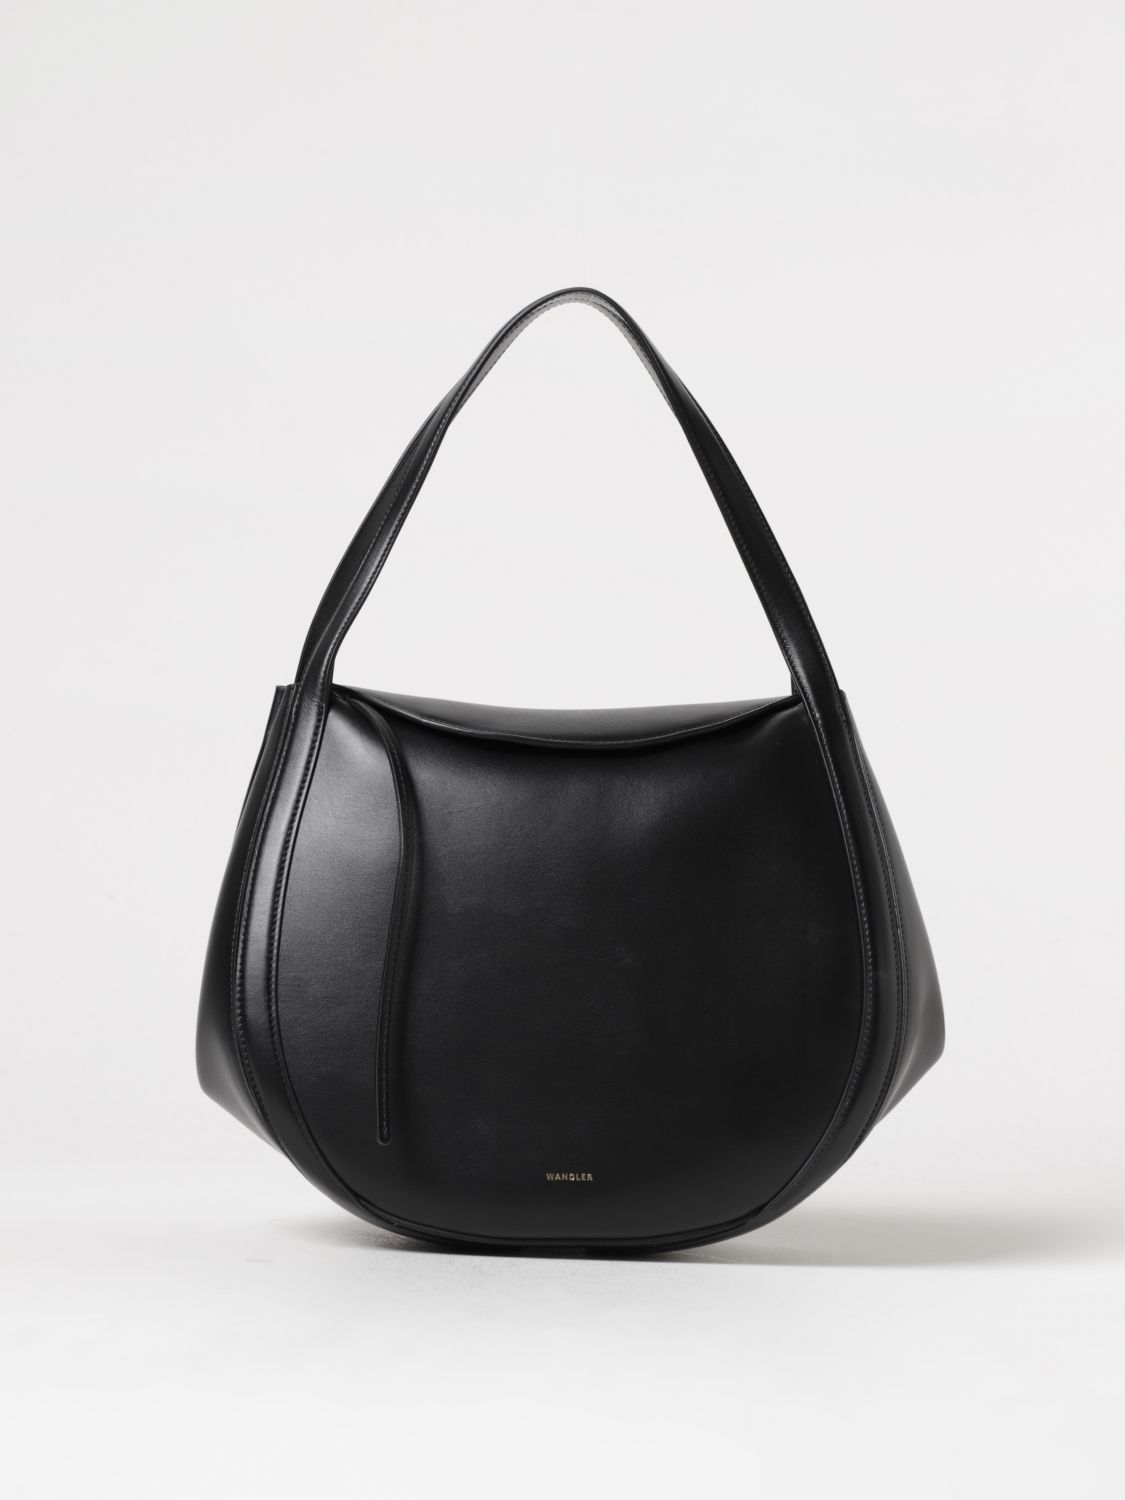 Wandler Handbag WANDLER Woman colour Black